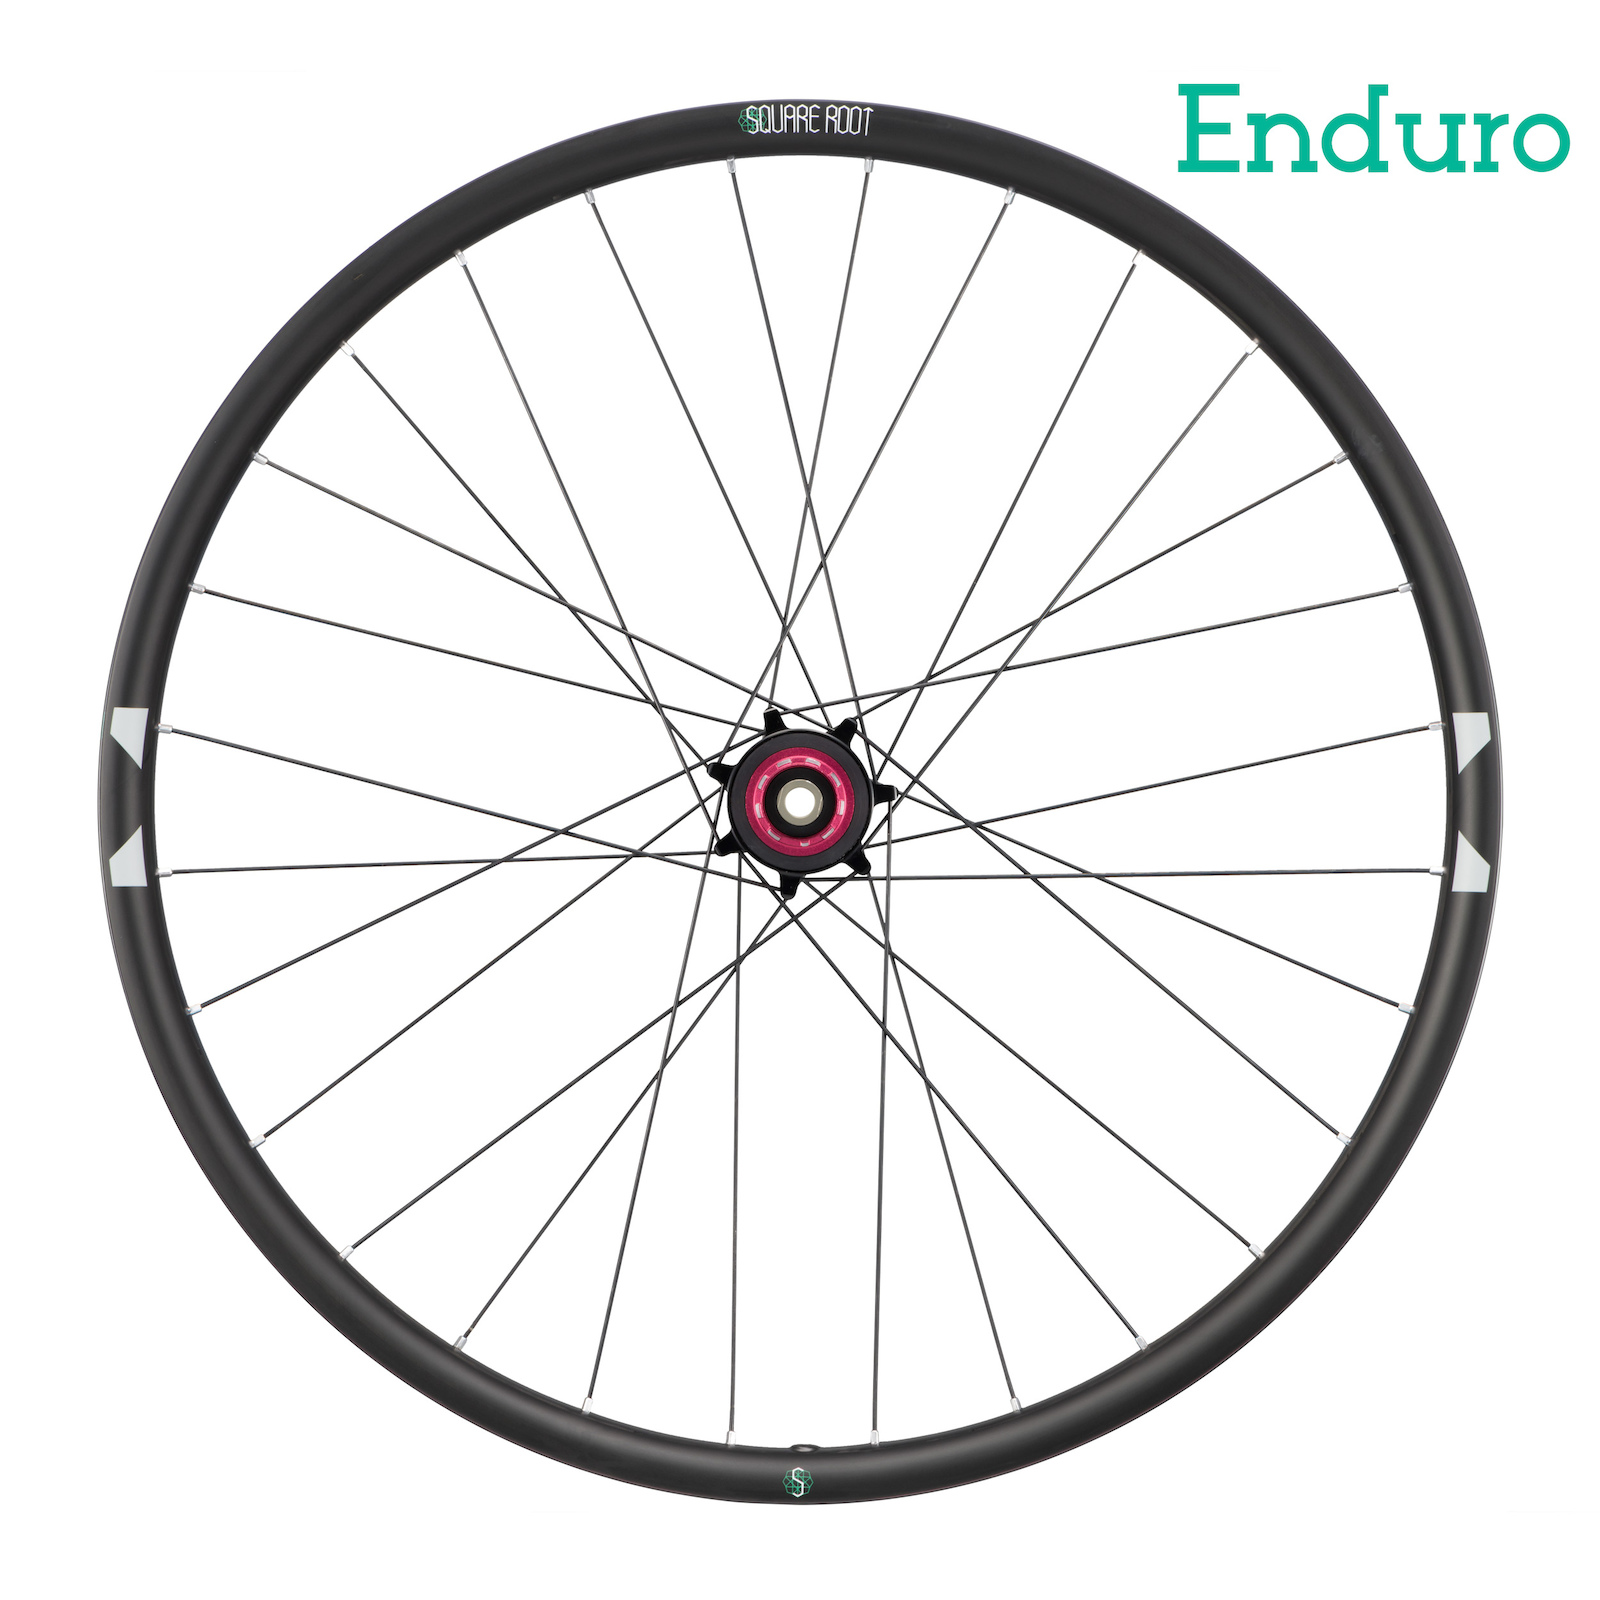 Square Root Enduro wheel (rear)